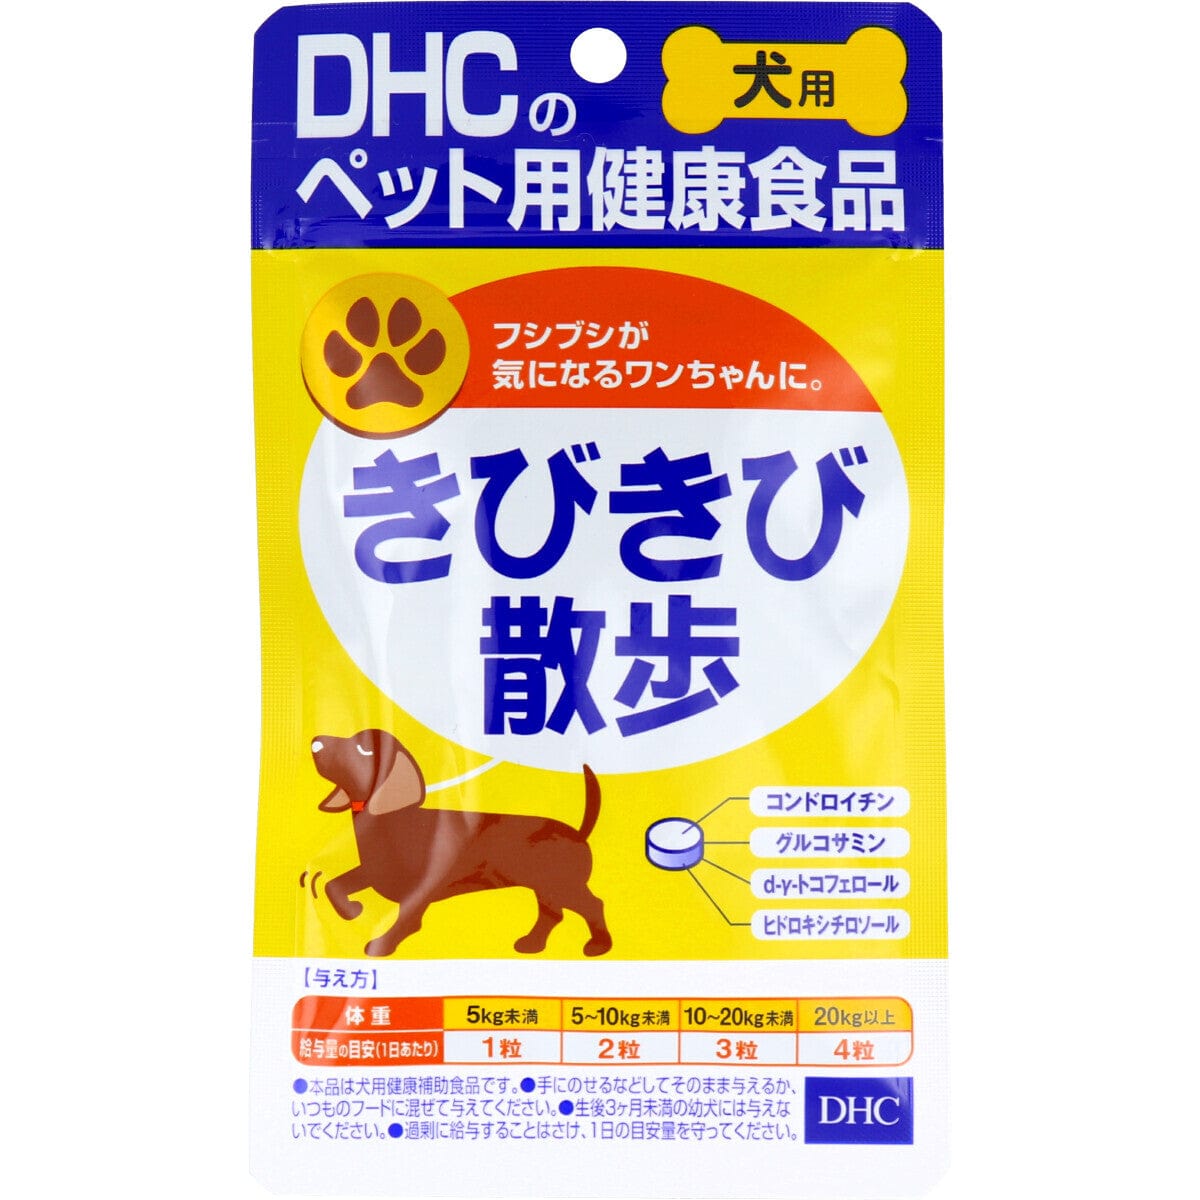 DHC - Hip & Joint Health Food Supplement for Pet Dogs Kibikibi (60 Tablets) -  Pet Dog Supplements  Durio.sg